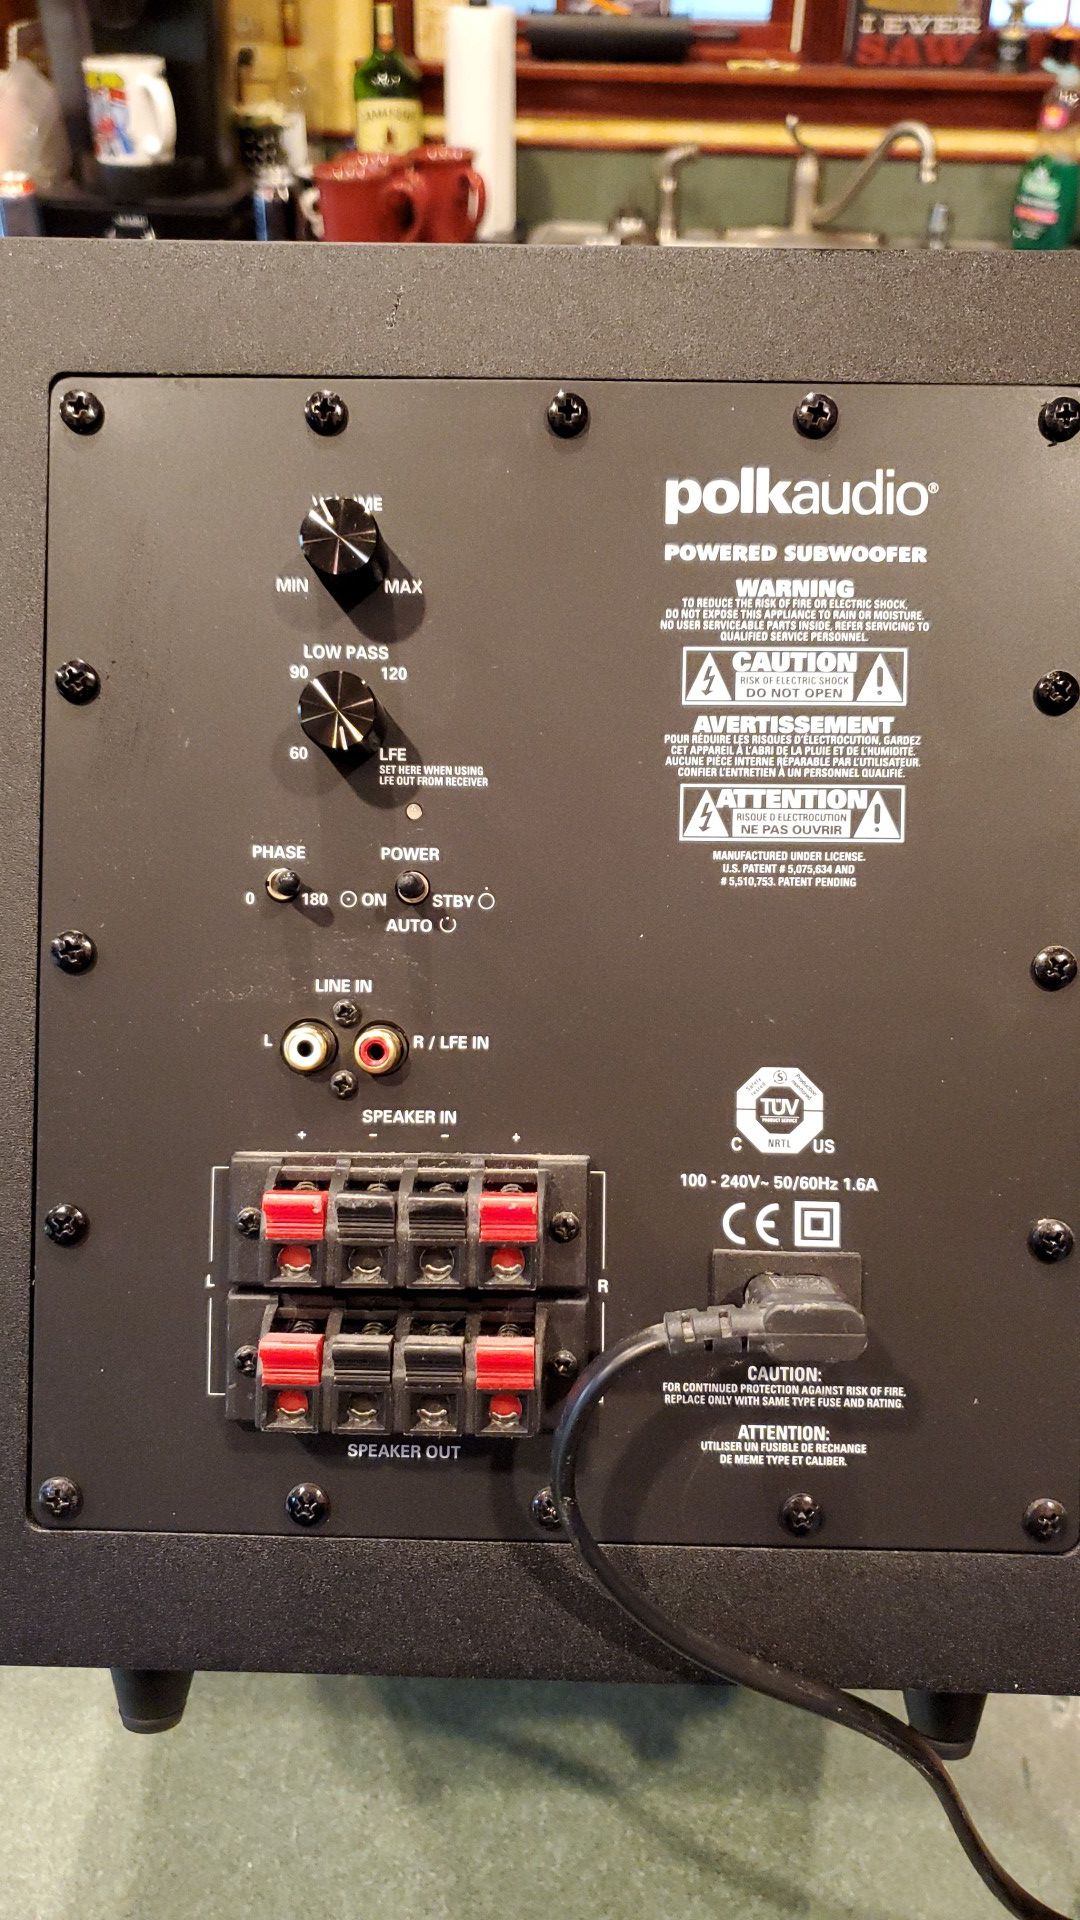 Polk audio powered subwoofer.